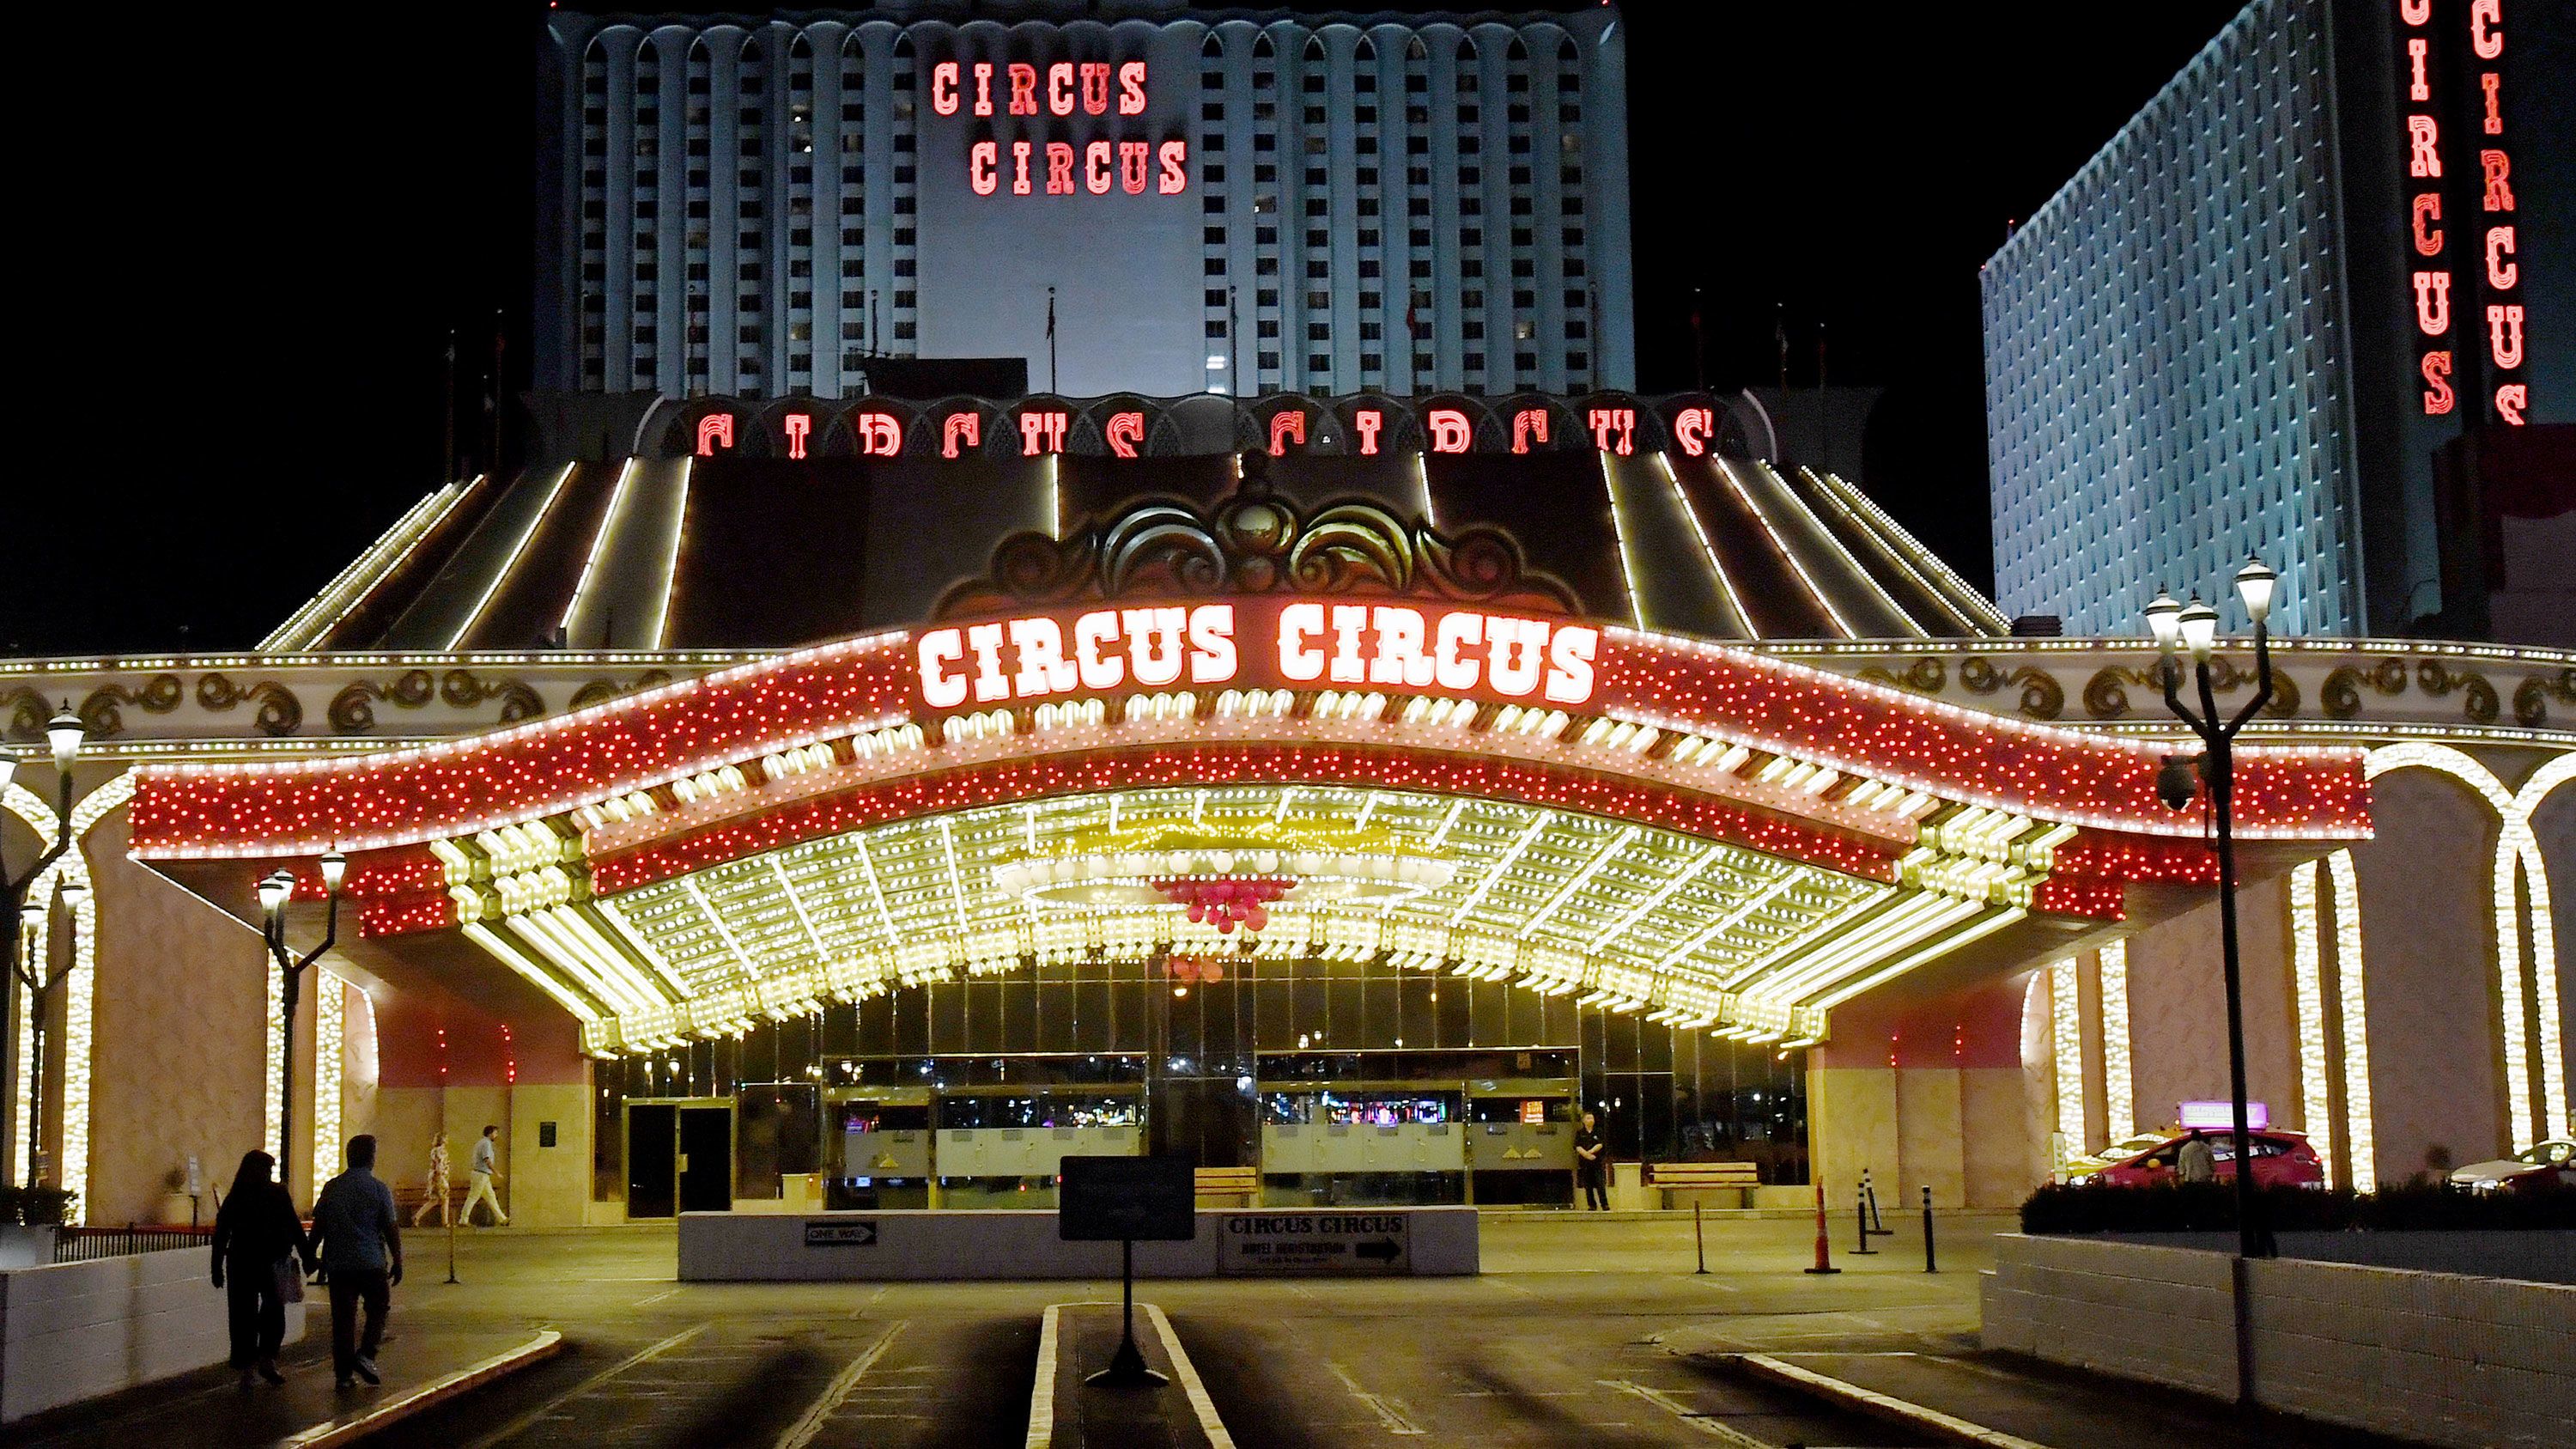 MGM Resorts sells Circus Circus, Bellagio on Las Vegas Strip